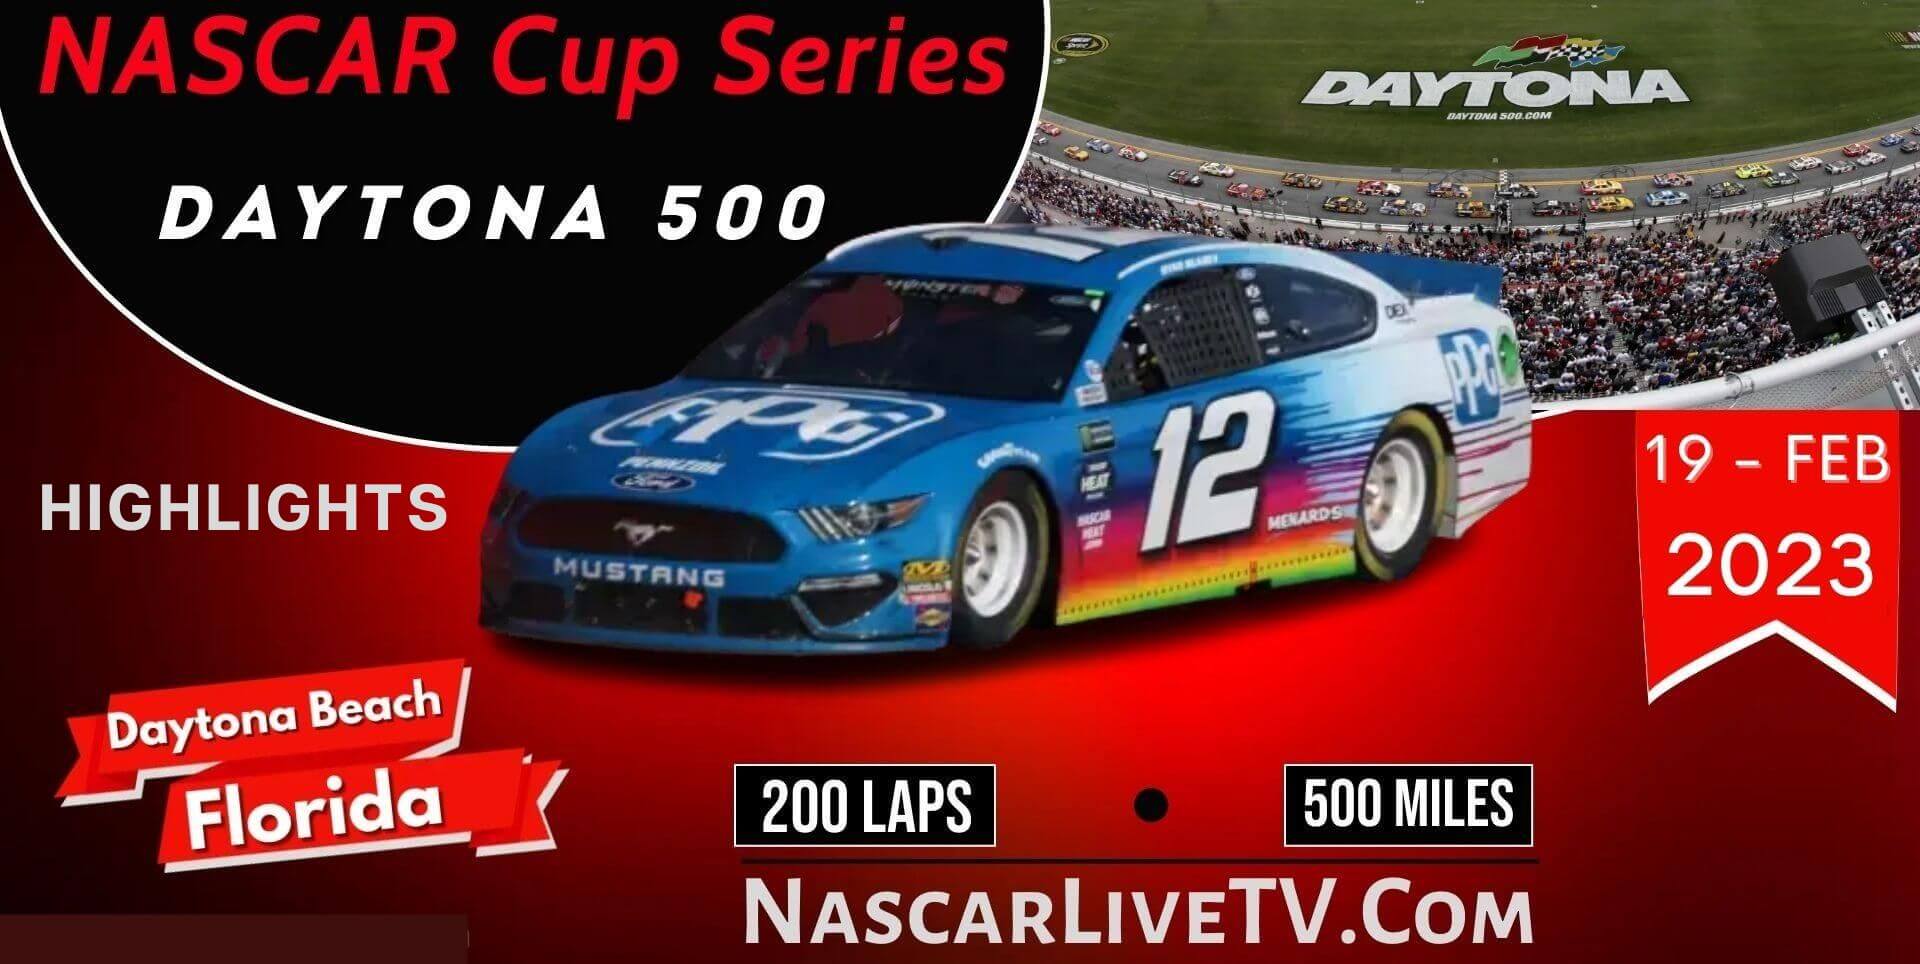 DAYTONA 500 Highlights NASCAR Cup Series 2023